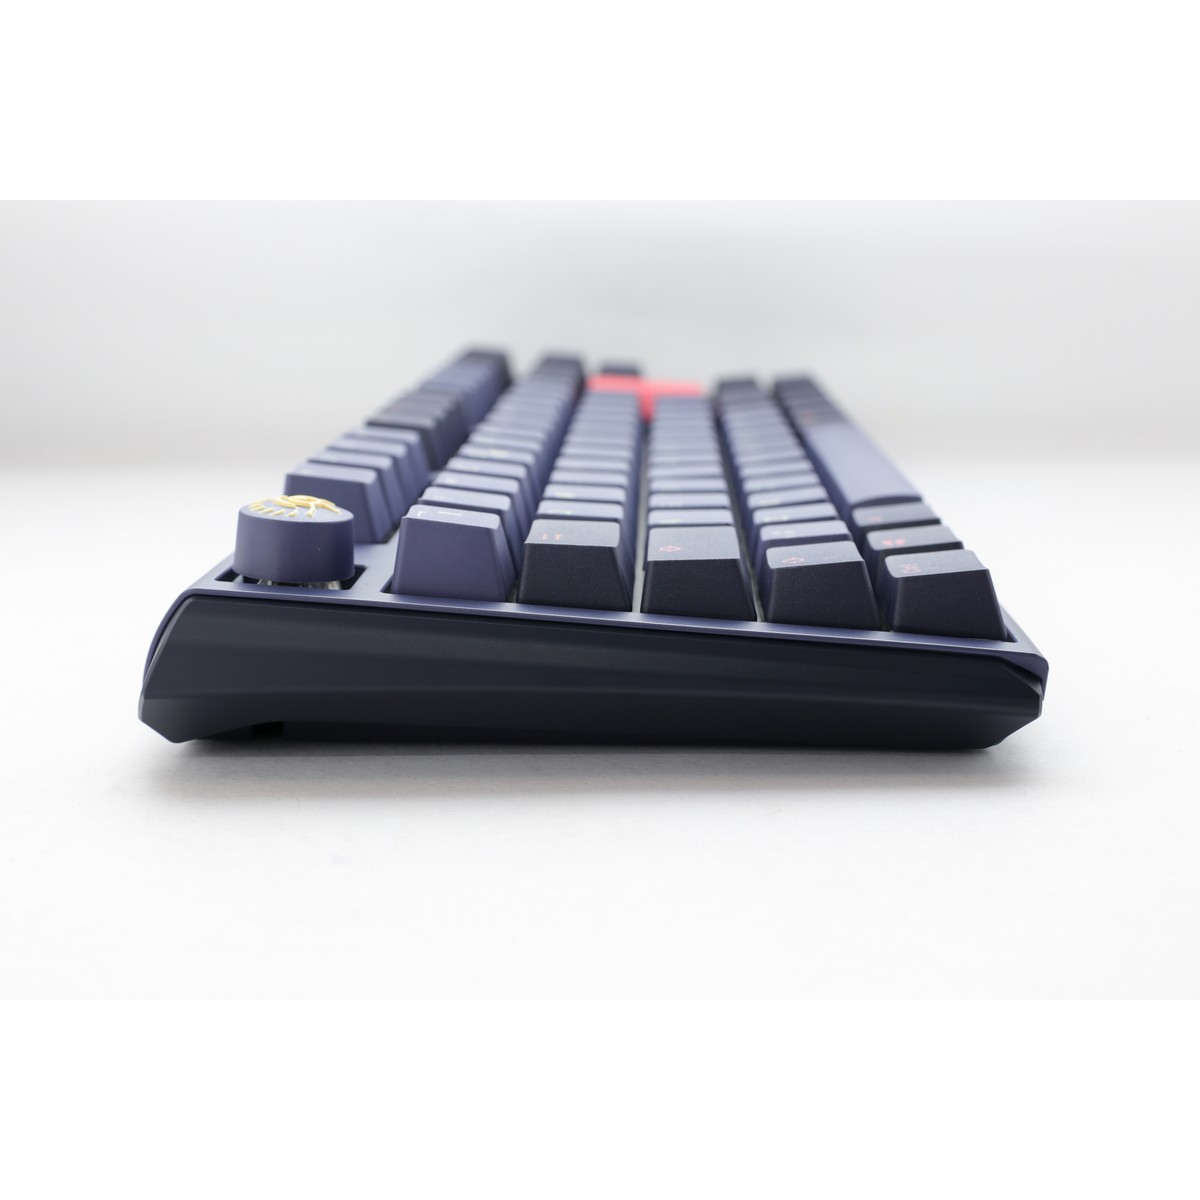 Ducky - Ducky One 3 Cosmic TKL 80% USB RGB Mechanical Gaming Keyboard Cherry MX Red Switch - UK Layout